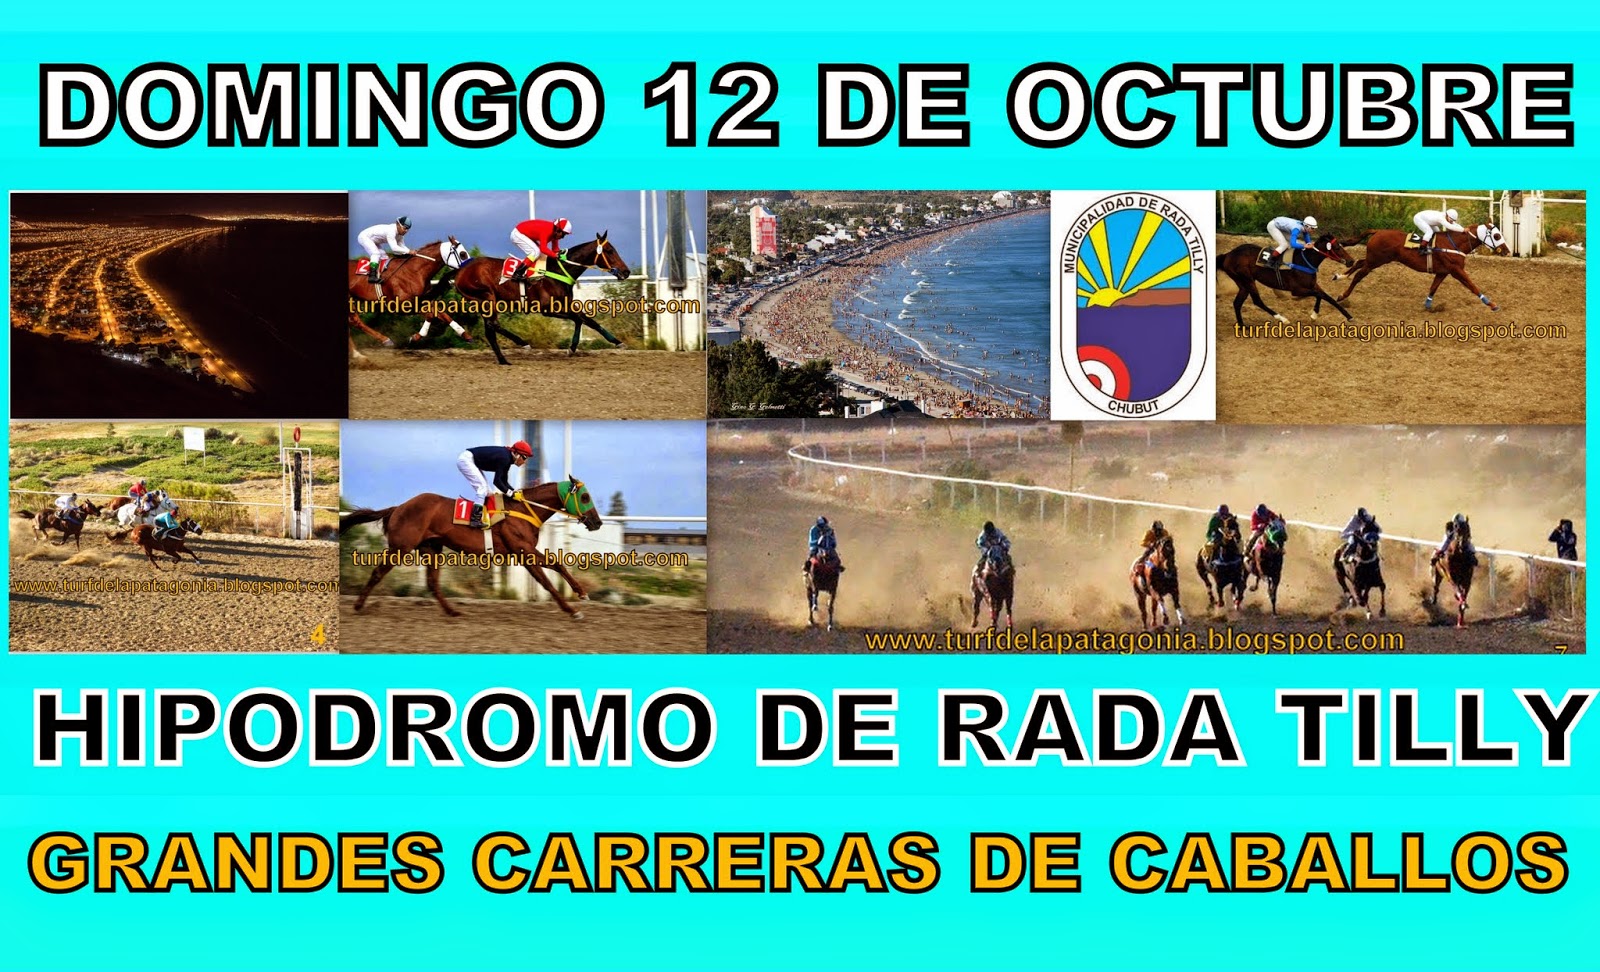 http://turfdelapatagonia.blogspot.com.ar/2014/10/1210-programa-de-carreras-de-caballos.html